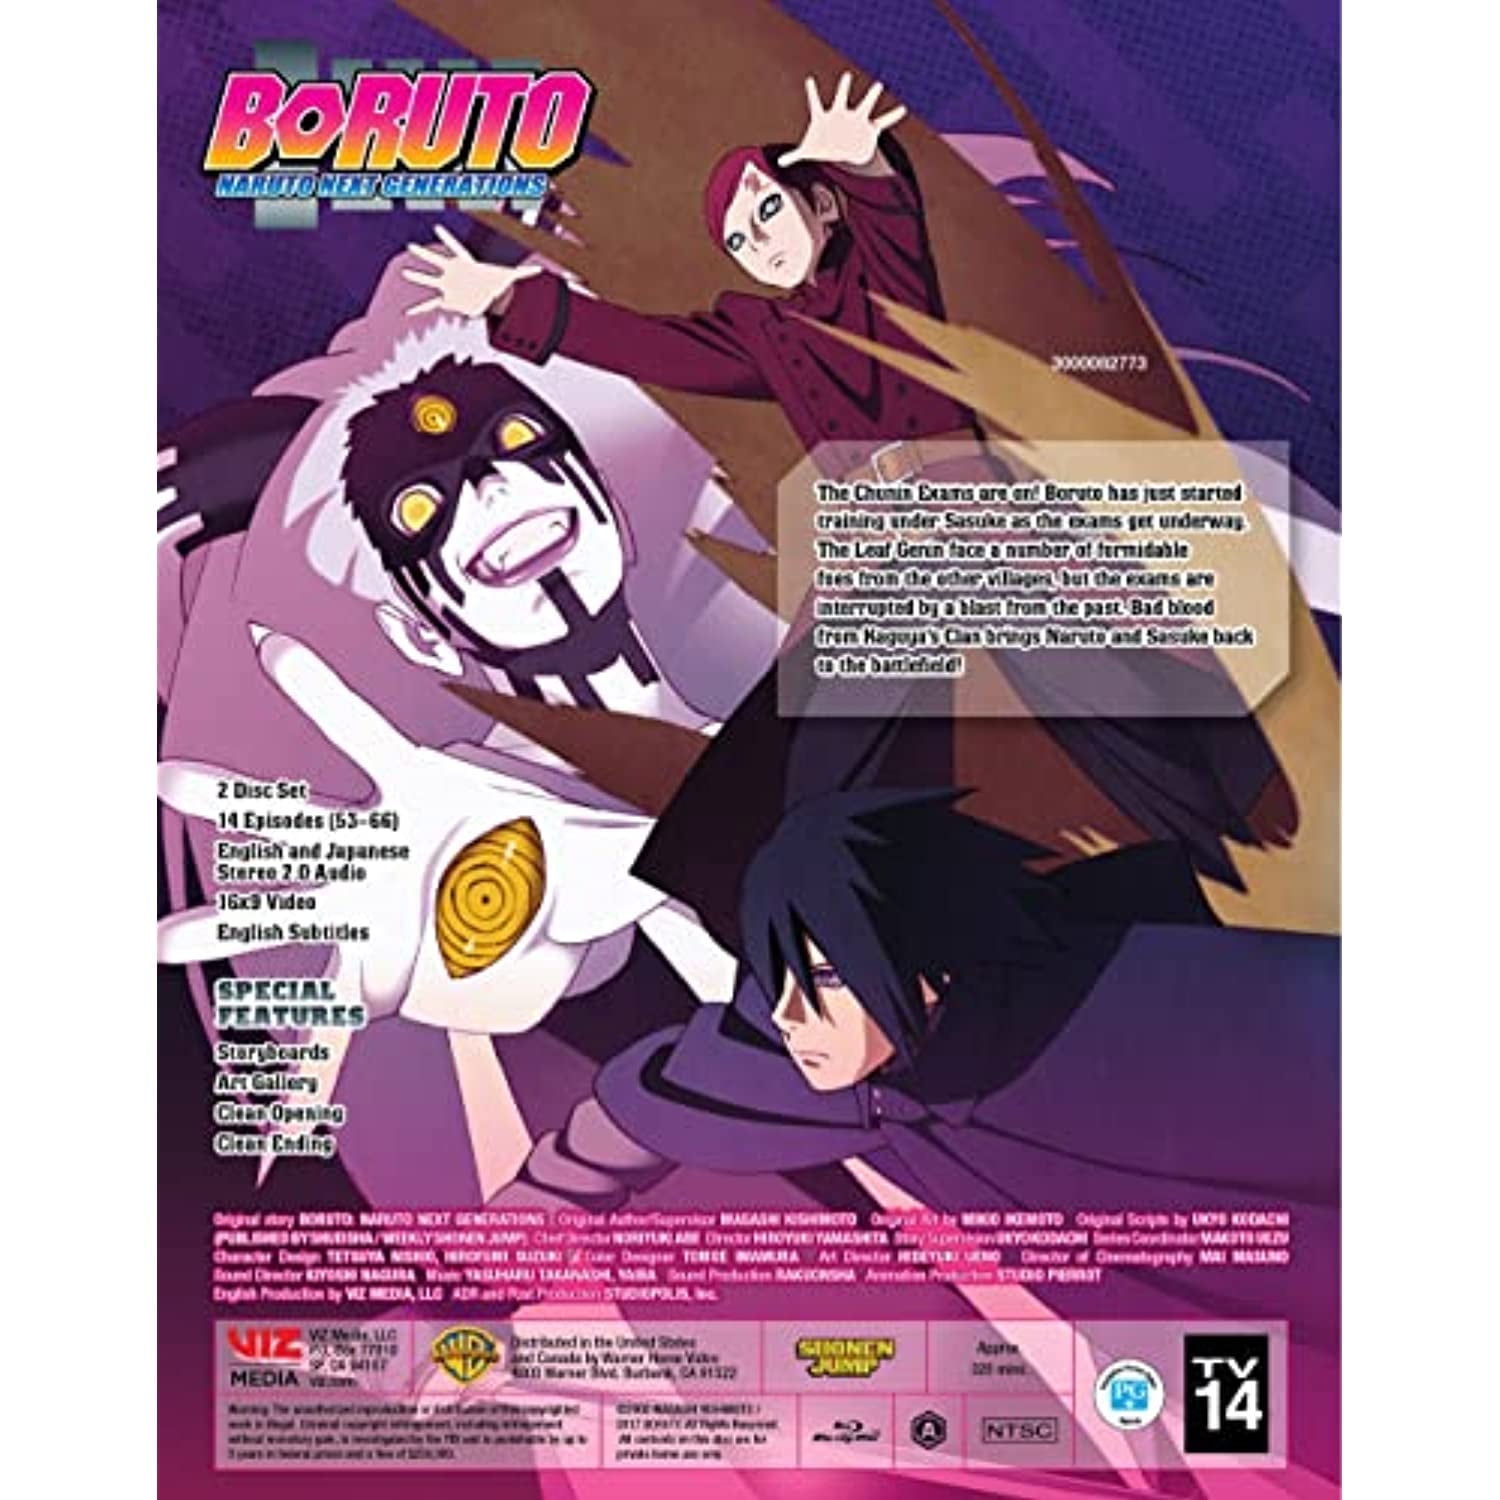 Boruto Naruto Next Generations Set 2 Blu-ray